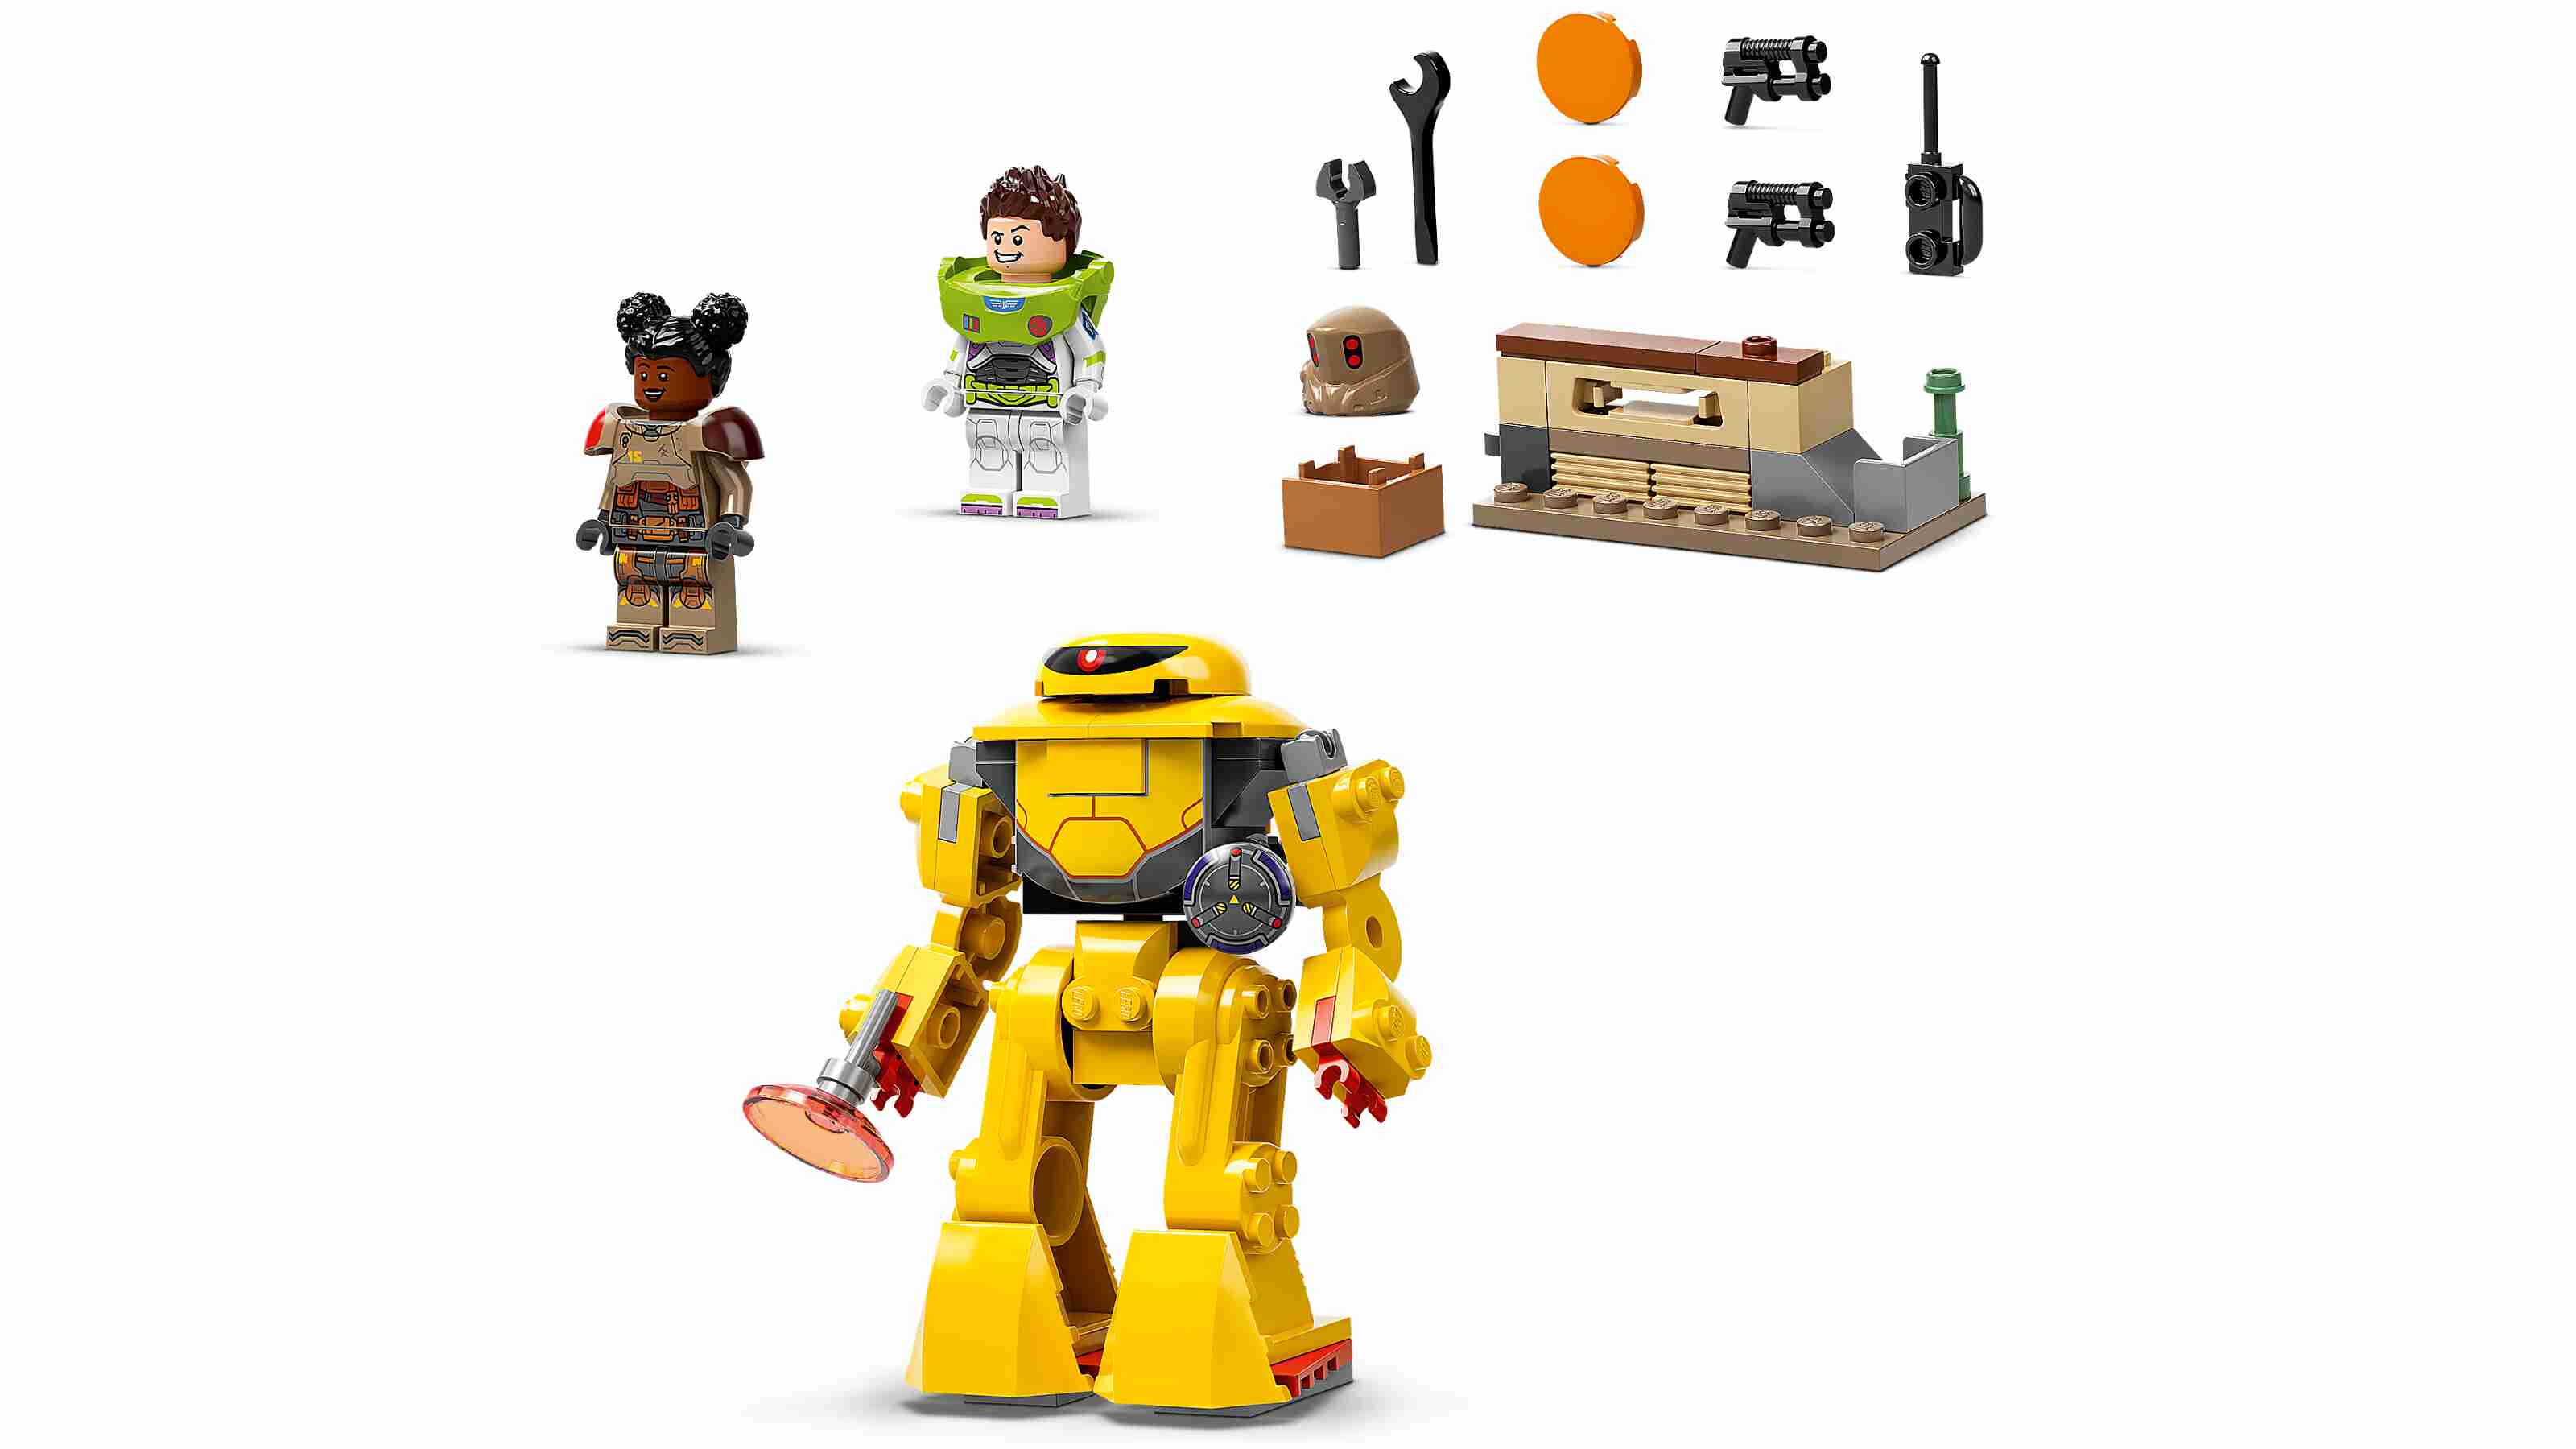 LEGO 76830 Disney and Pixar’s Lightyear Zyclops-Verfolgungsjagd Weltraum